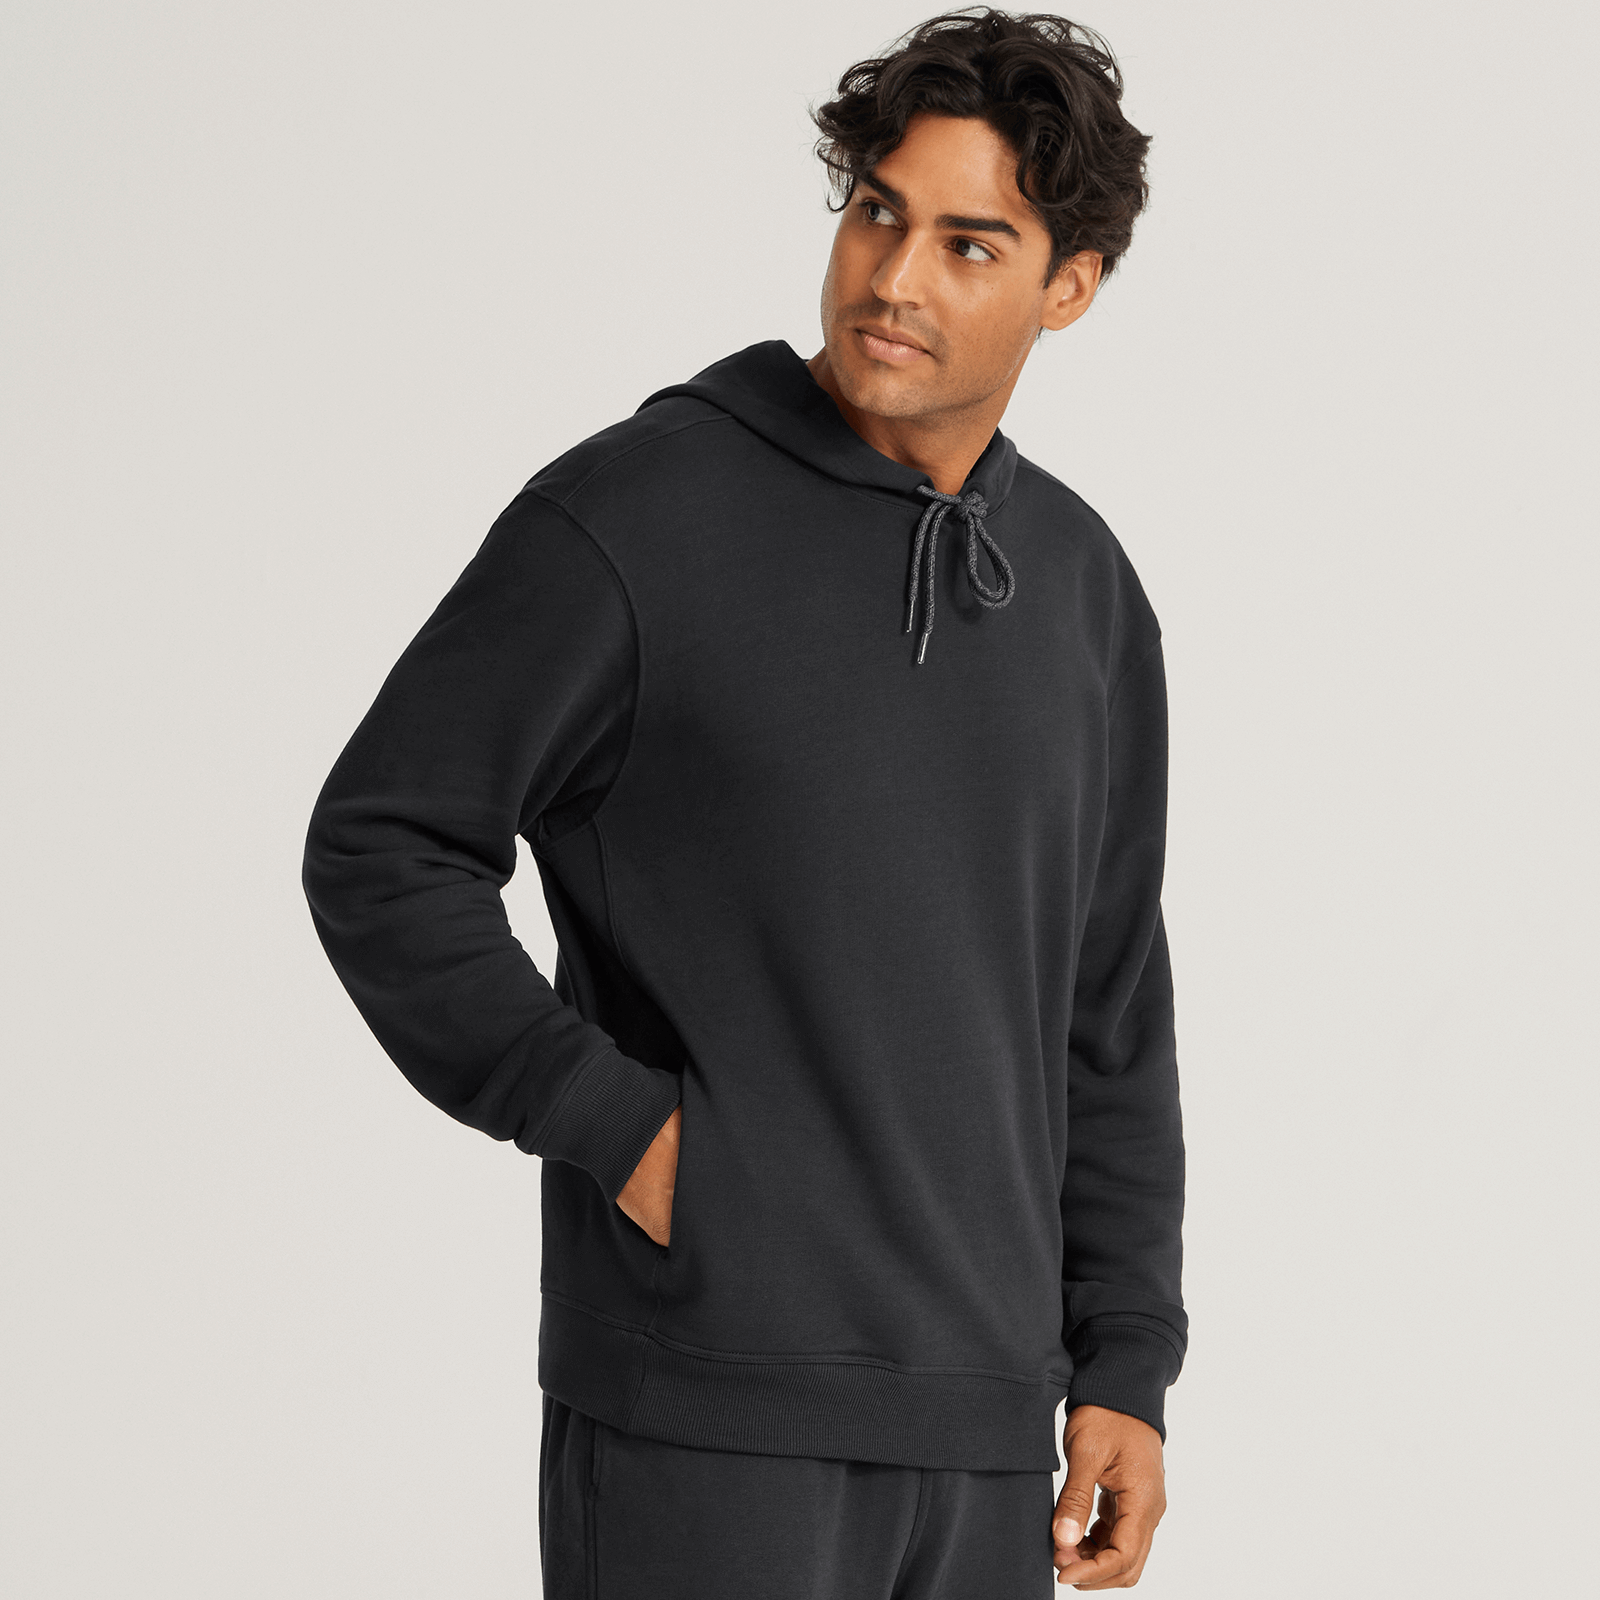 Men,s Plain Classic Sweatshirt Sweater Jumper Top Casual Work Sport Blu-M SIZE 